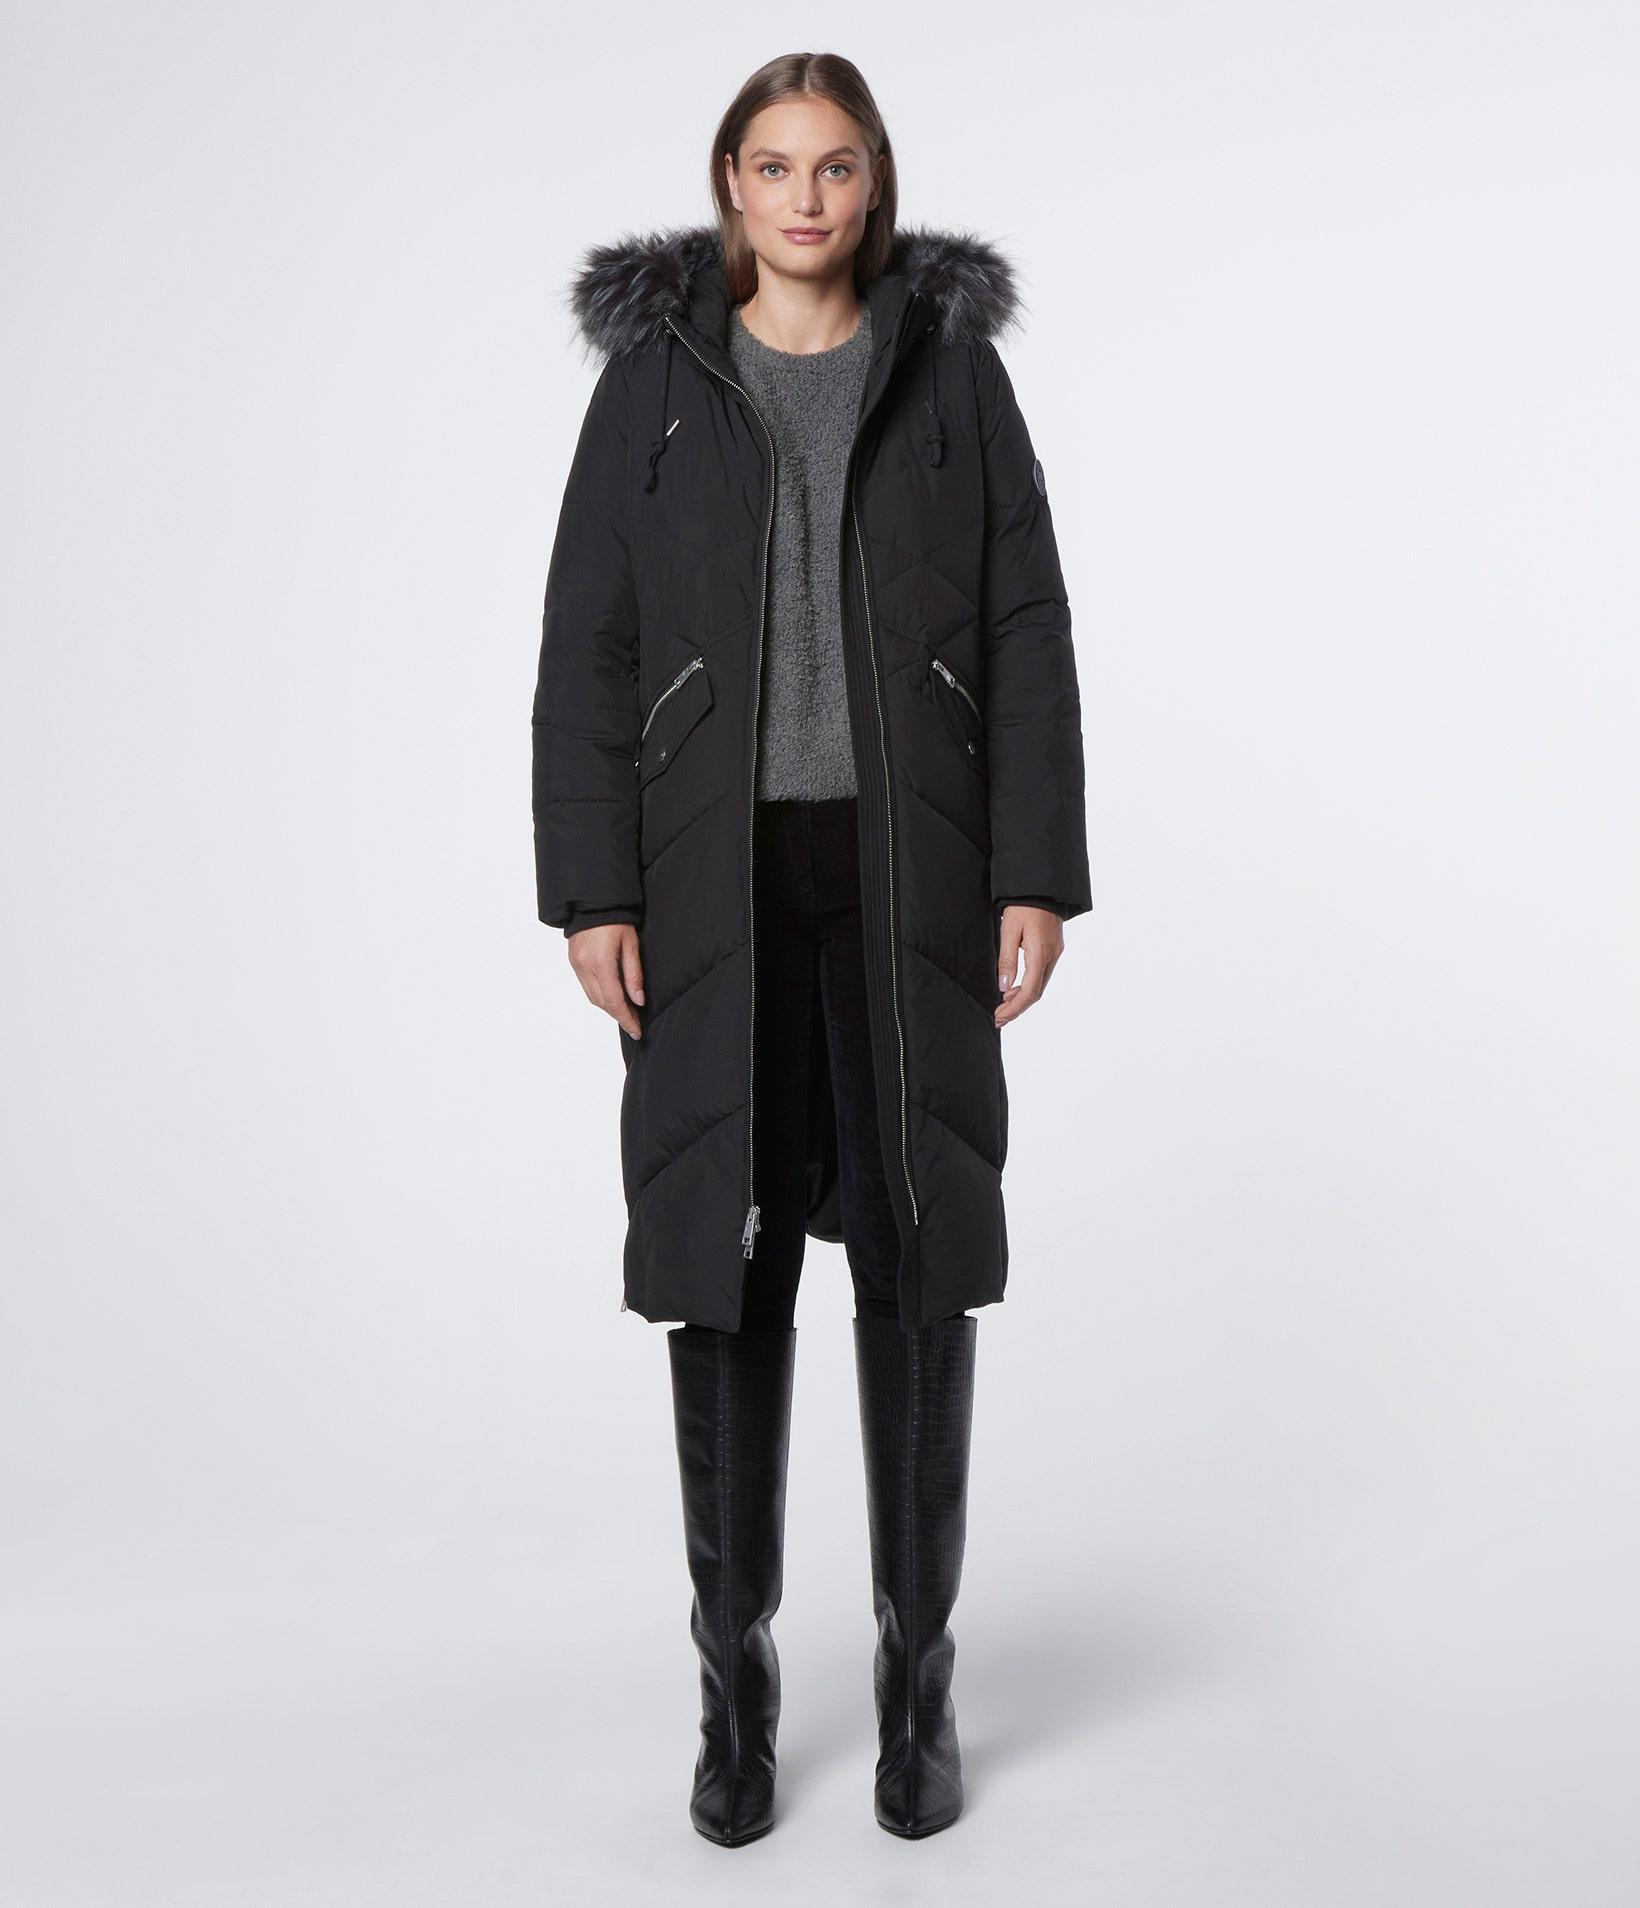 Andrew Marc Womens Phoebe Faux Fur Trim Down Coat - Black Product Image